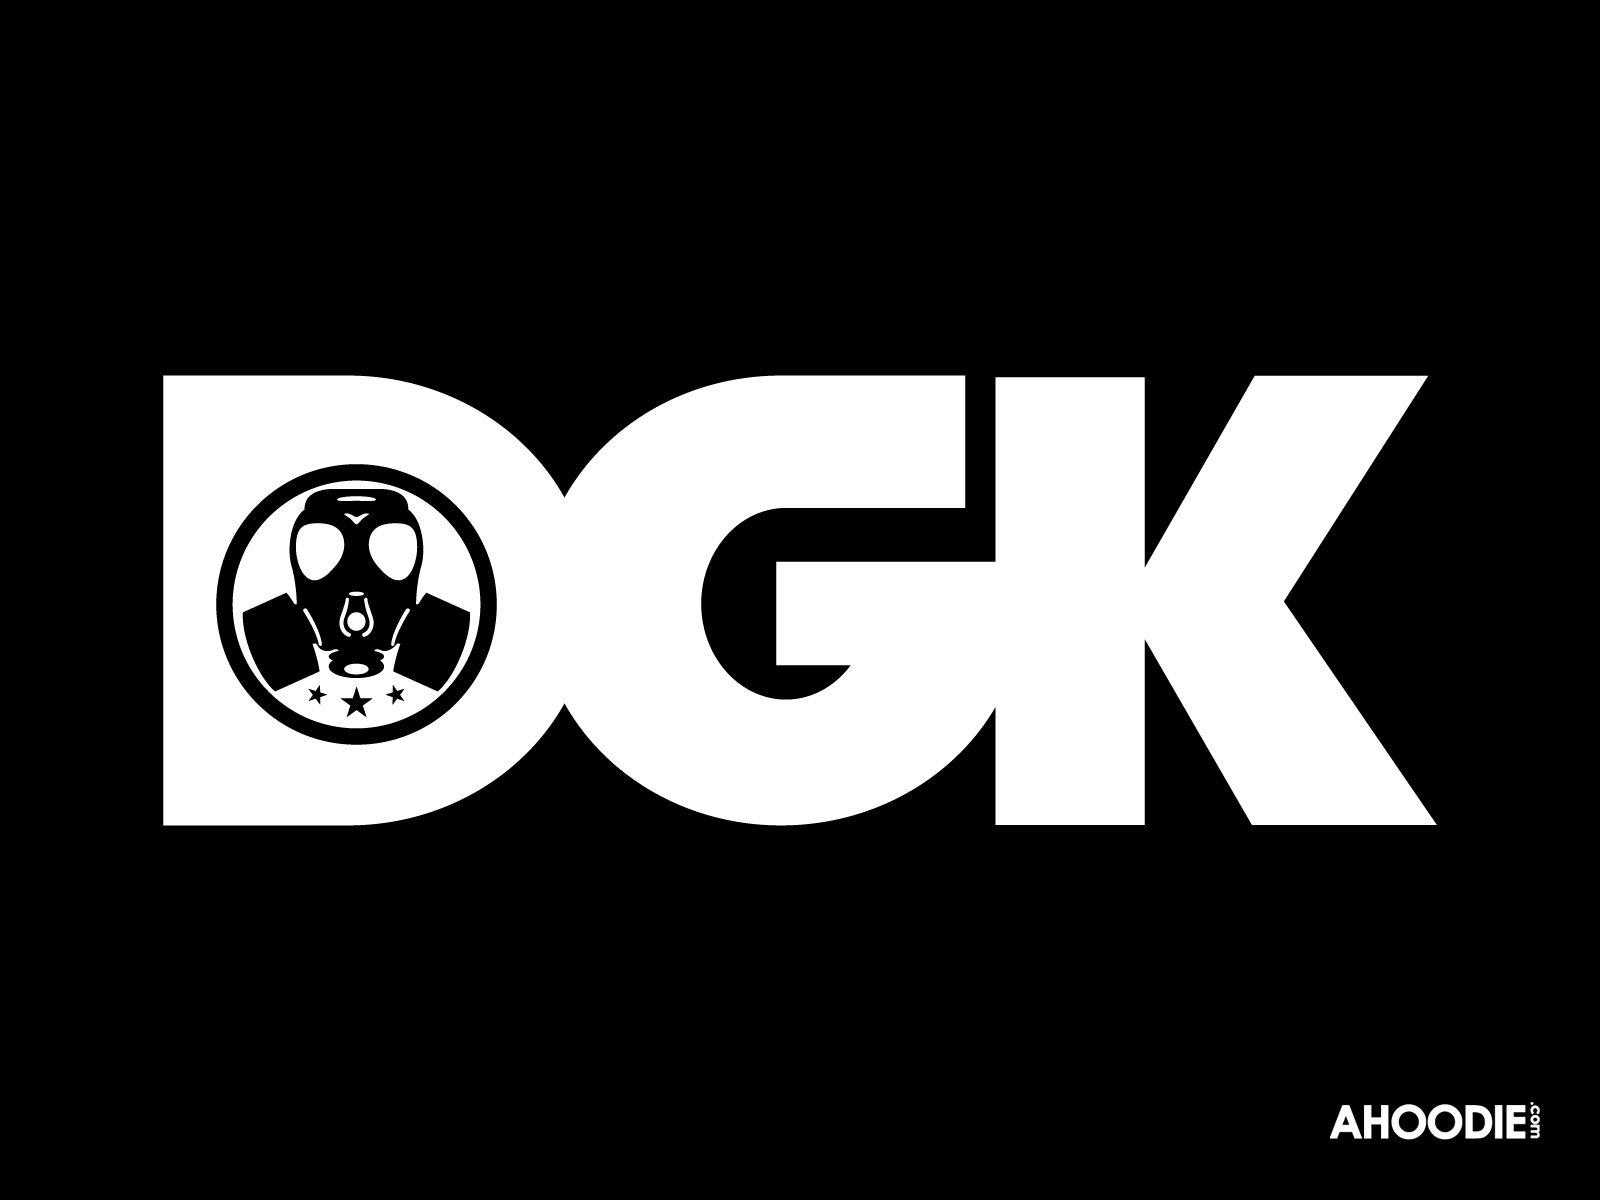 I like the DGK logo because it feels very bold, and I like how